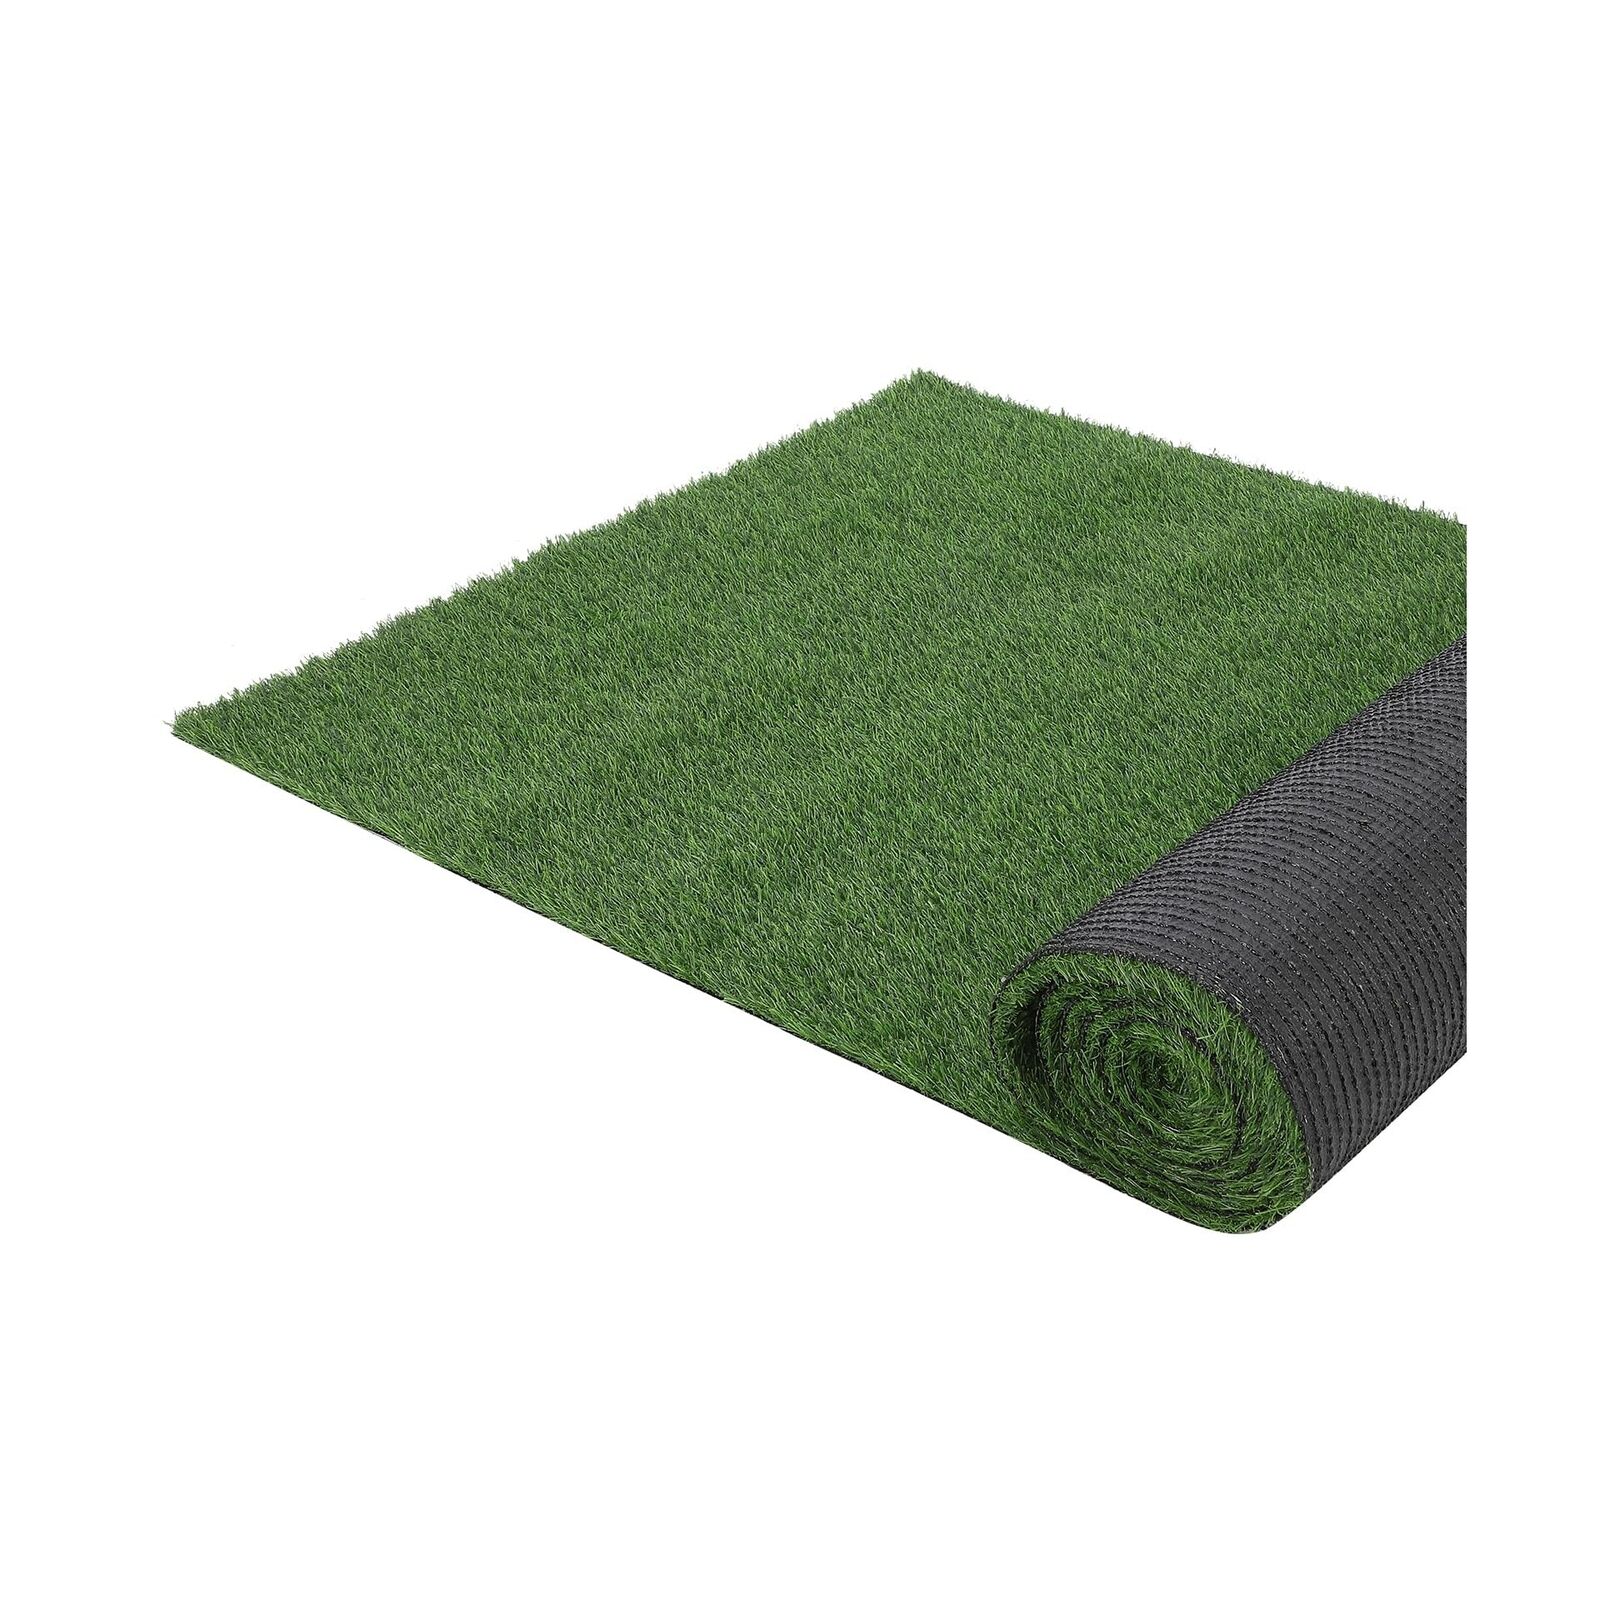 Artificial Grass, Professional Dog Grass Mat, Potty Training Rug and Replacem...